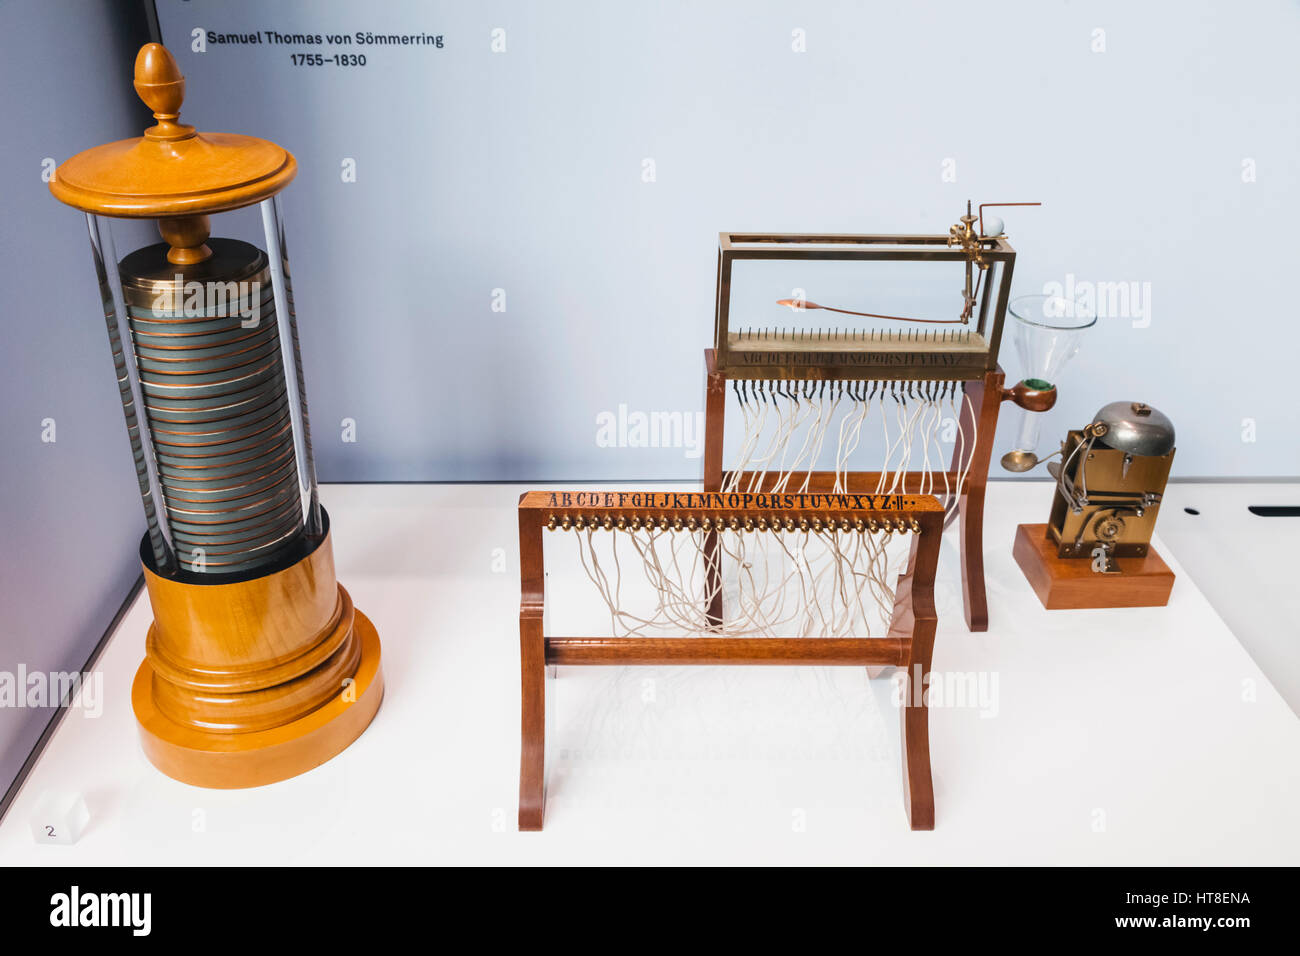 England, London, South Kensington, Science Museum, Samuel von Sommerring elektrochemische Telegraph Maschine Stockfoto